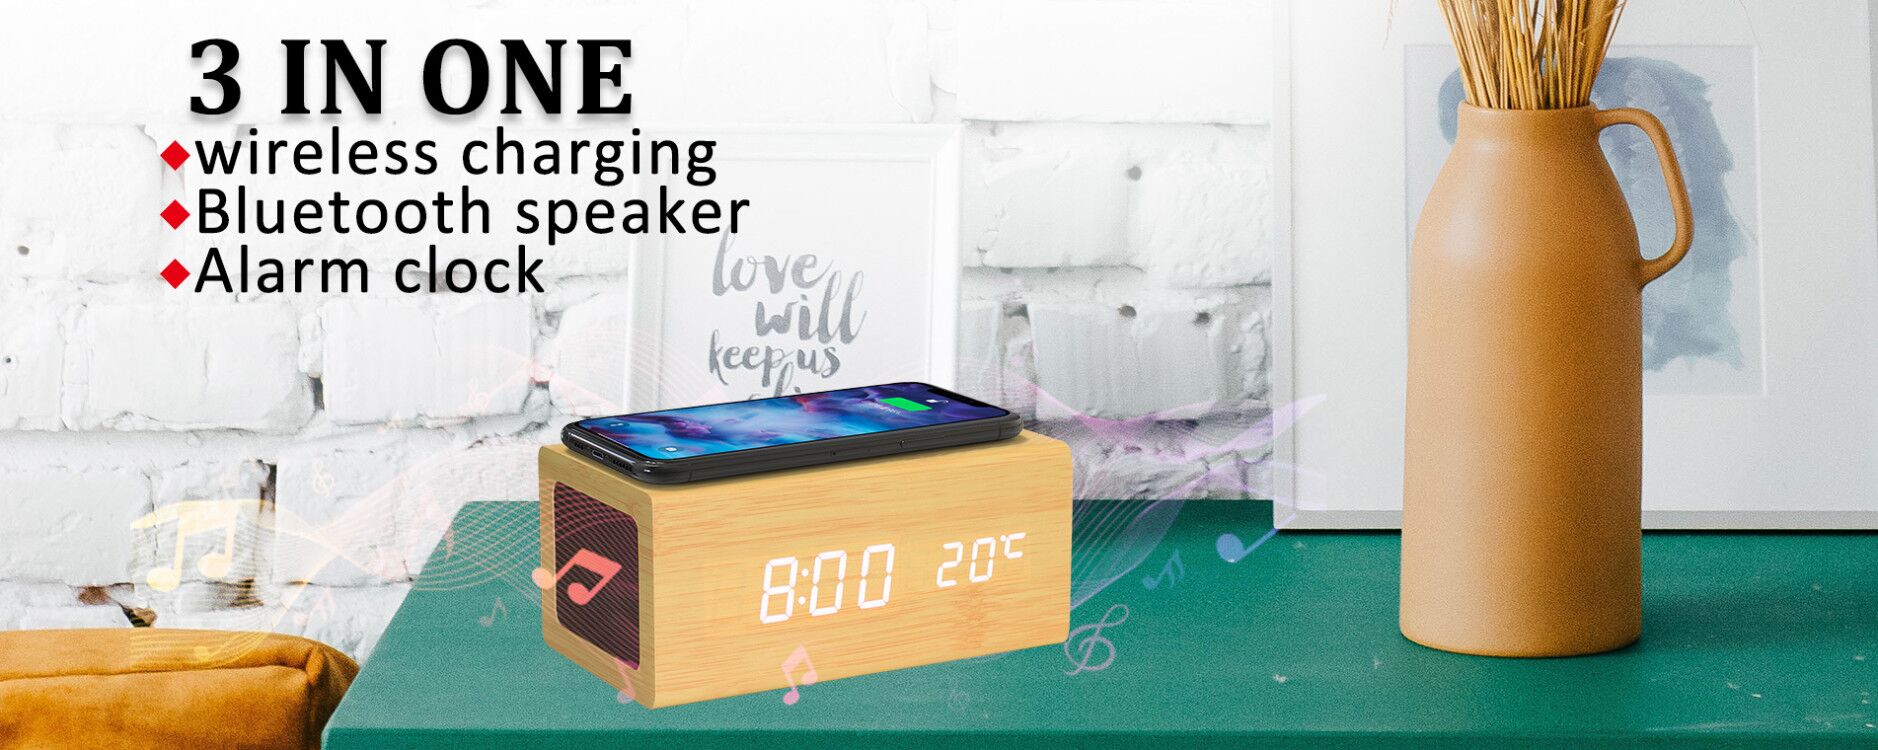 bluetooth speaker wireless charging alarm clock